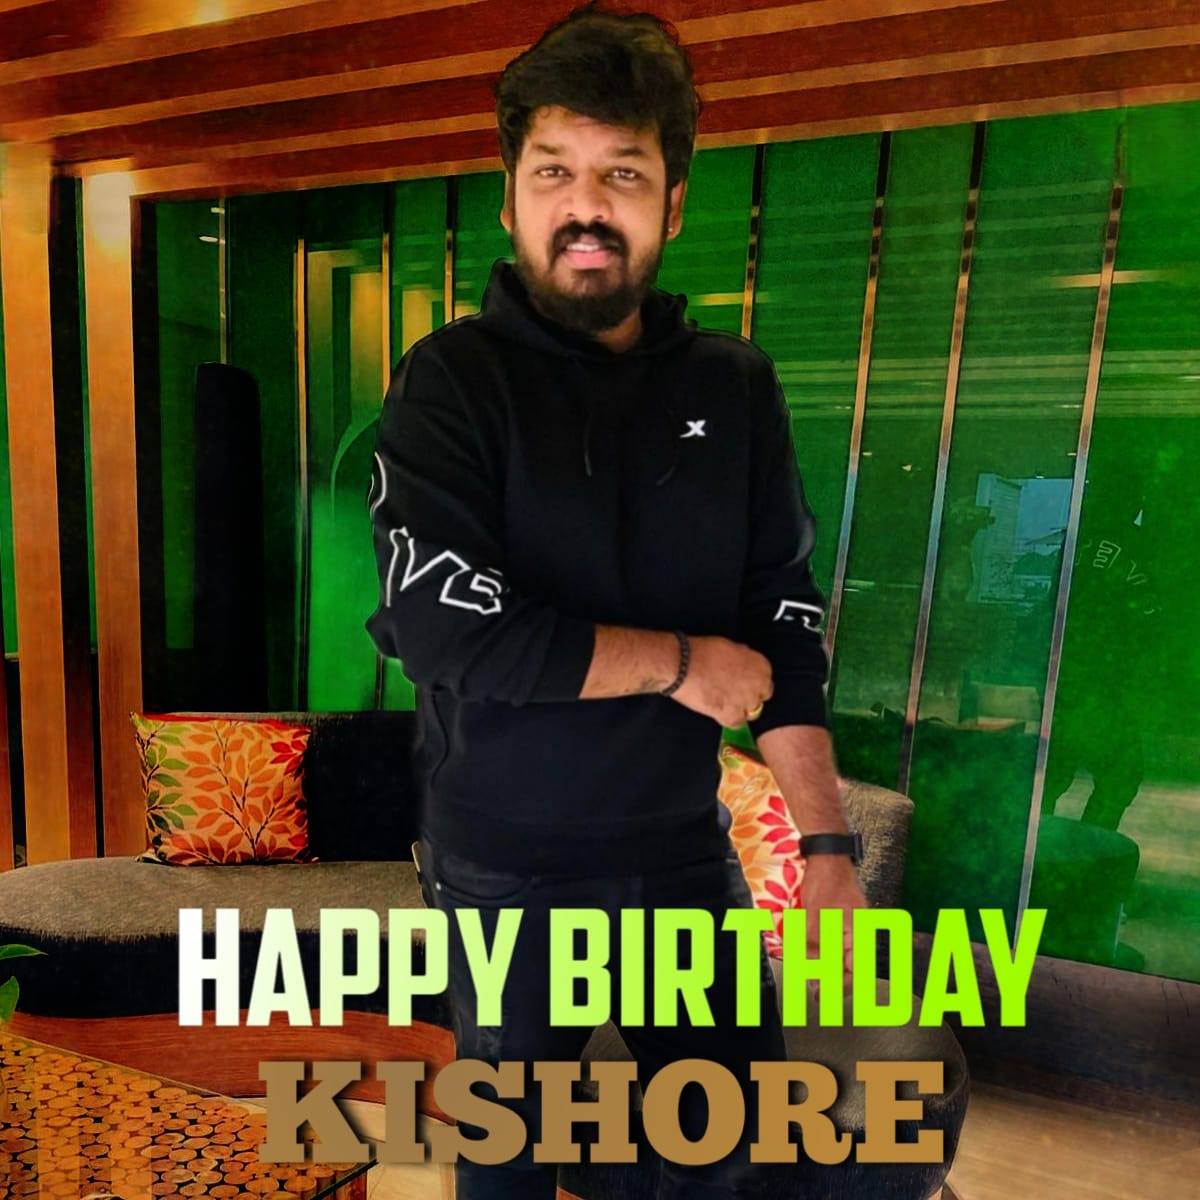 May 22nd Wishing a very happy birthday to young talented Editor ✂️ @editorkishore #LawrenceKishore #HBDLawrenceKishore